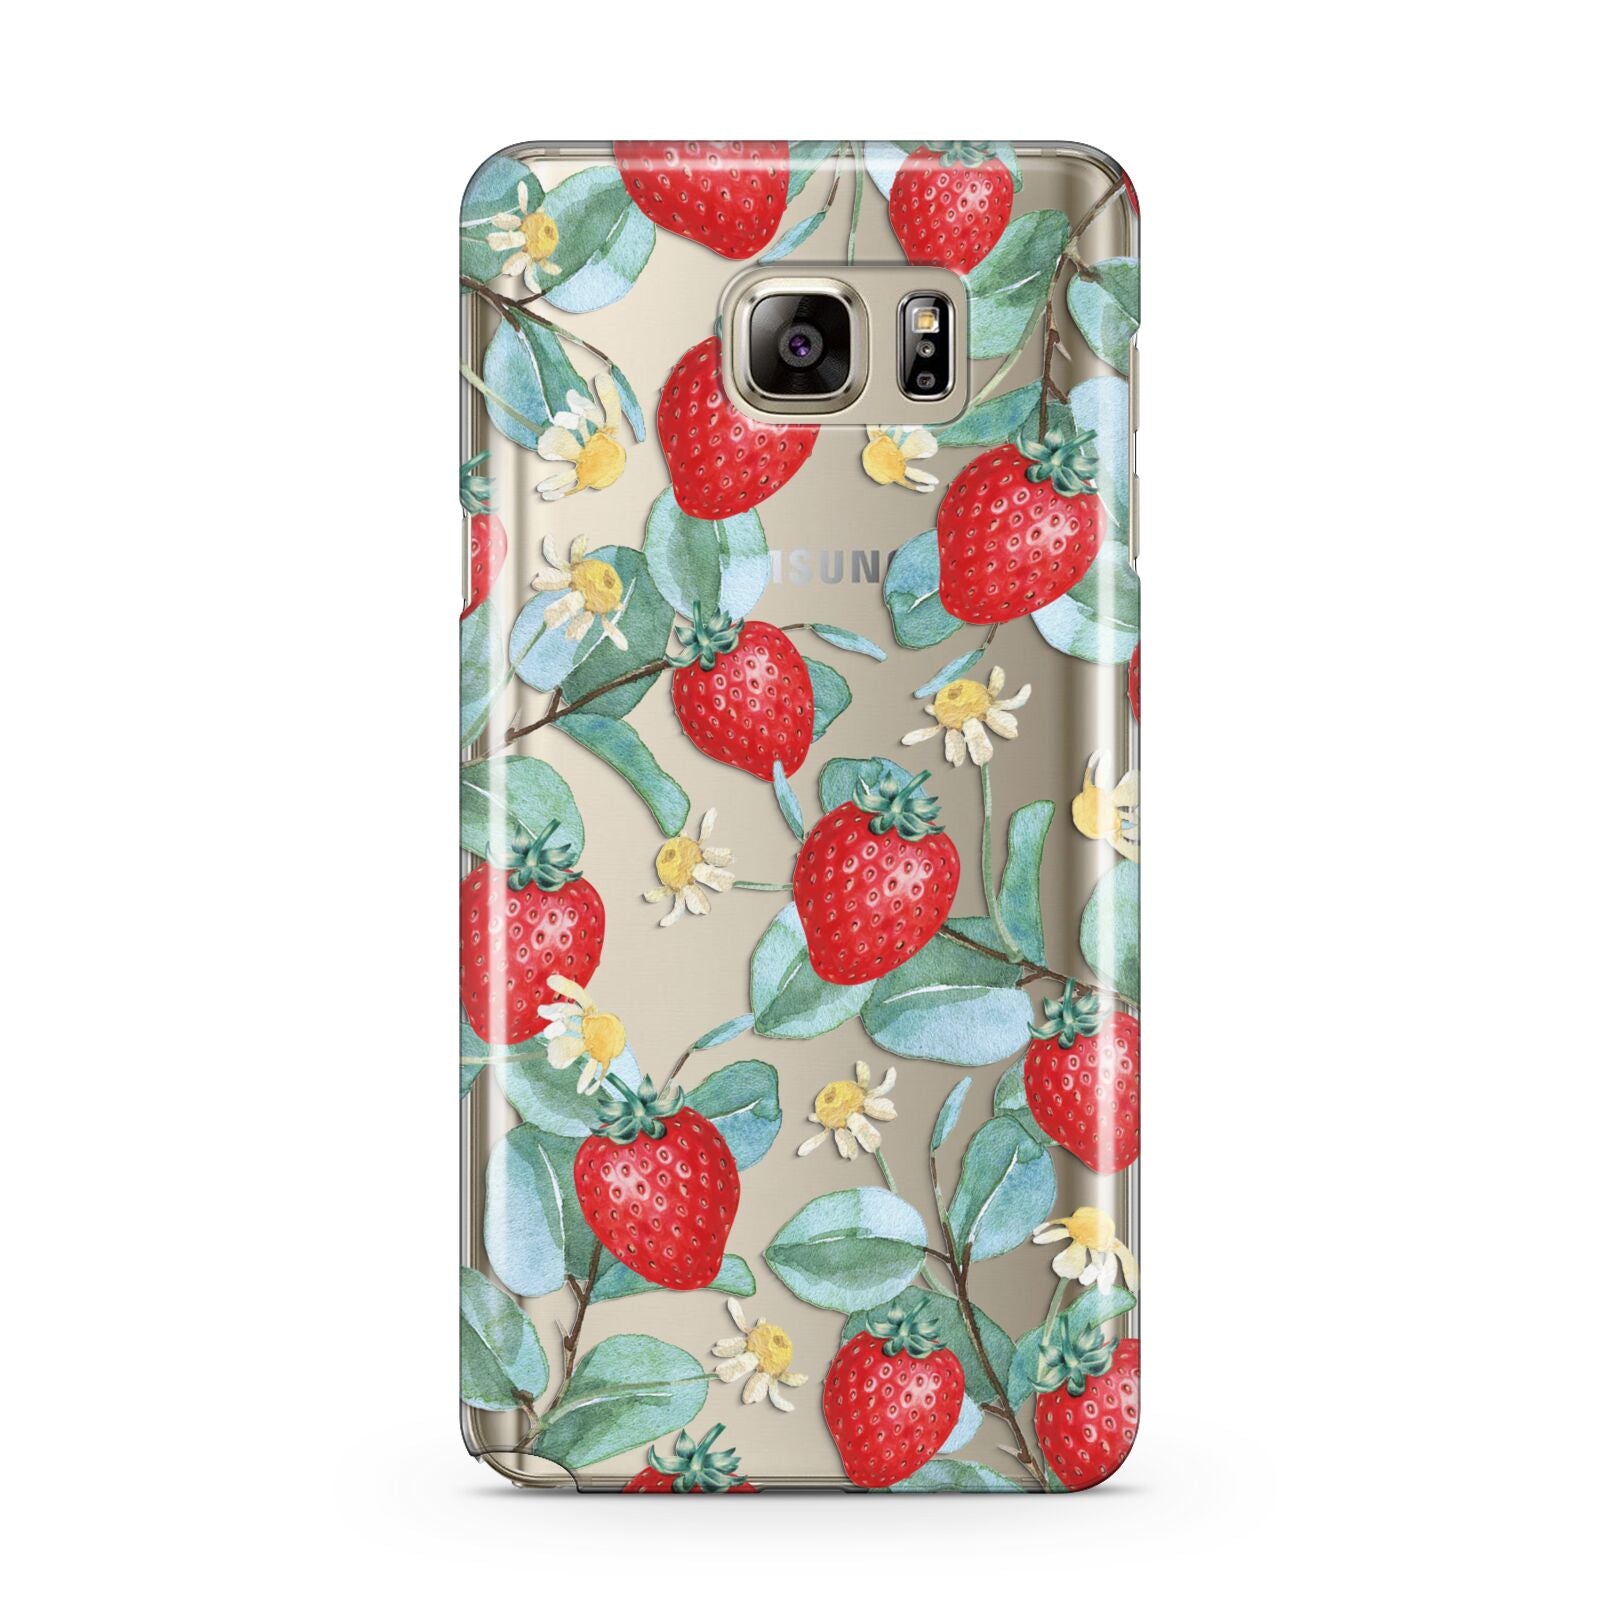 Strawberry Plant Samsung Galaxy Note 5 Case